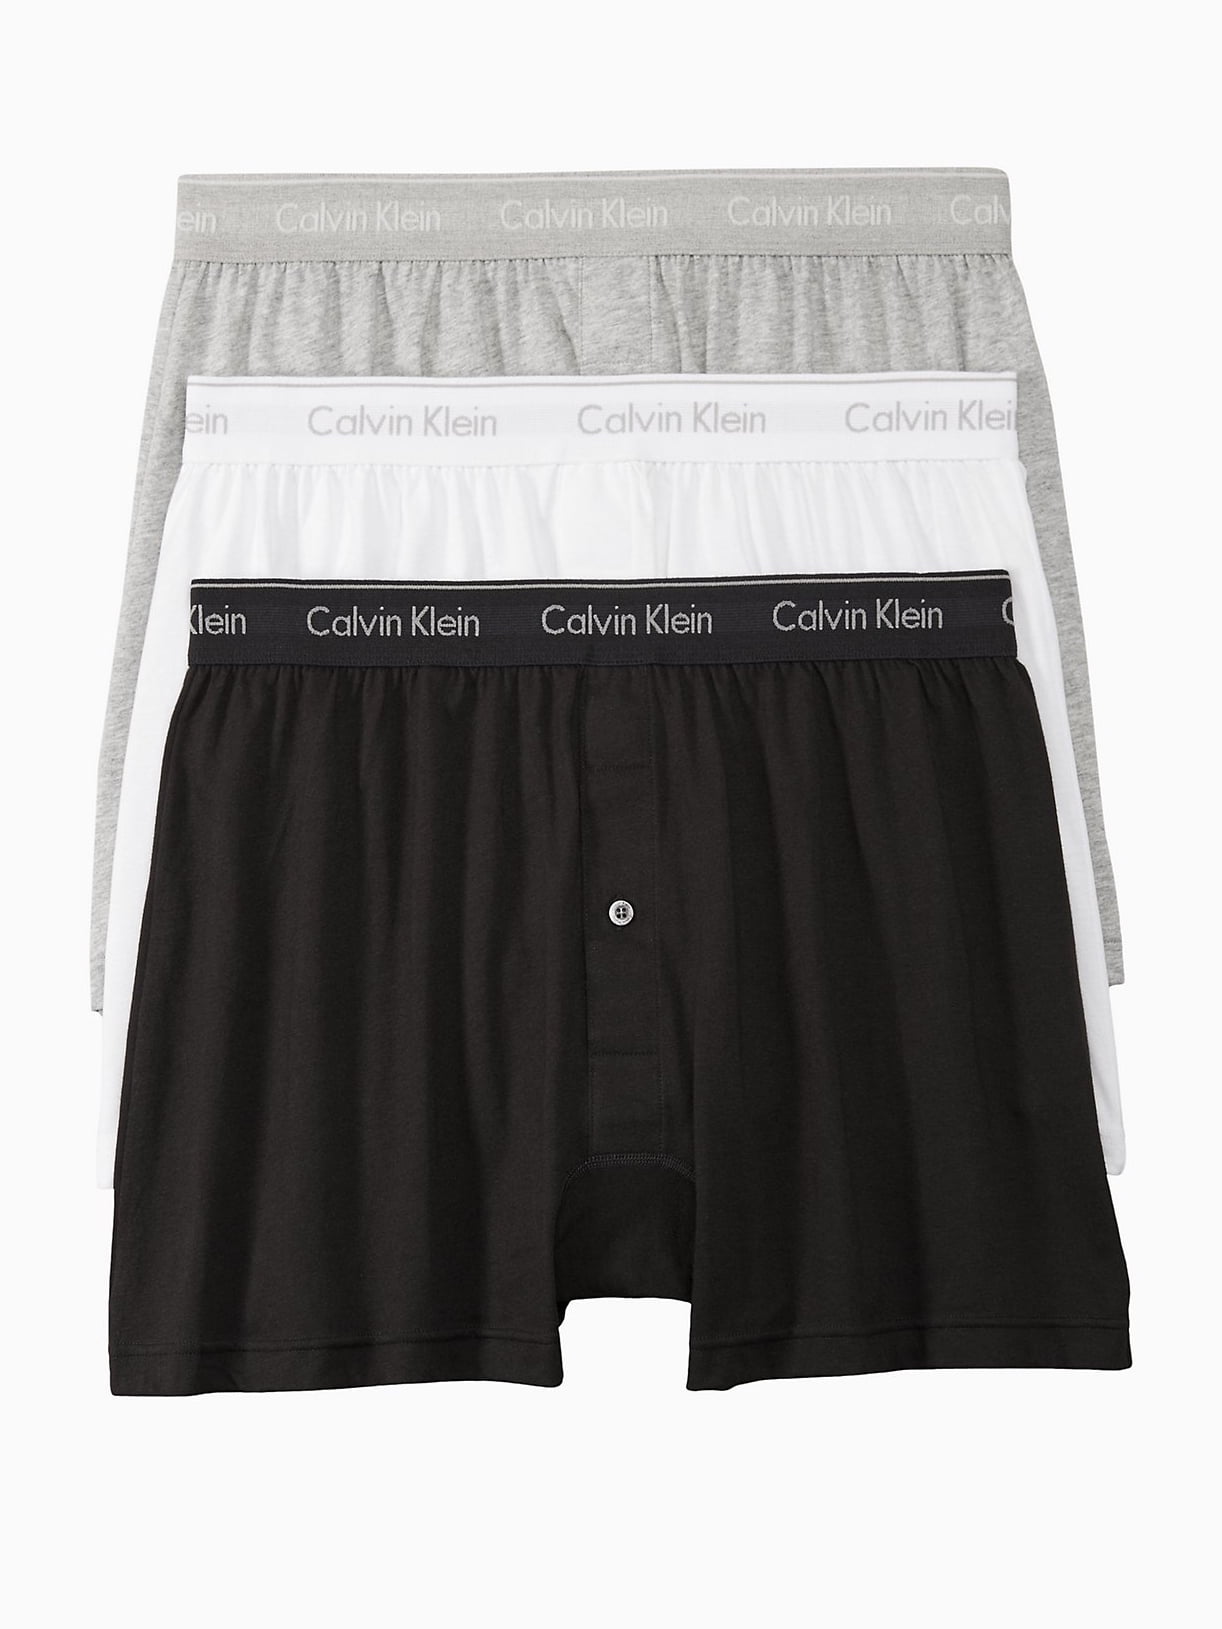 Calvin Klein Men's Cotton Classics Knit Boxer -3 Pack, Grey/White